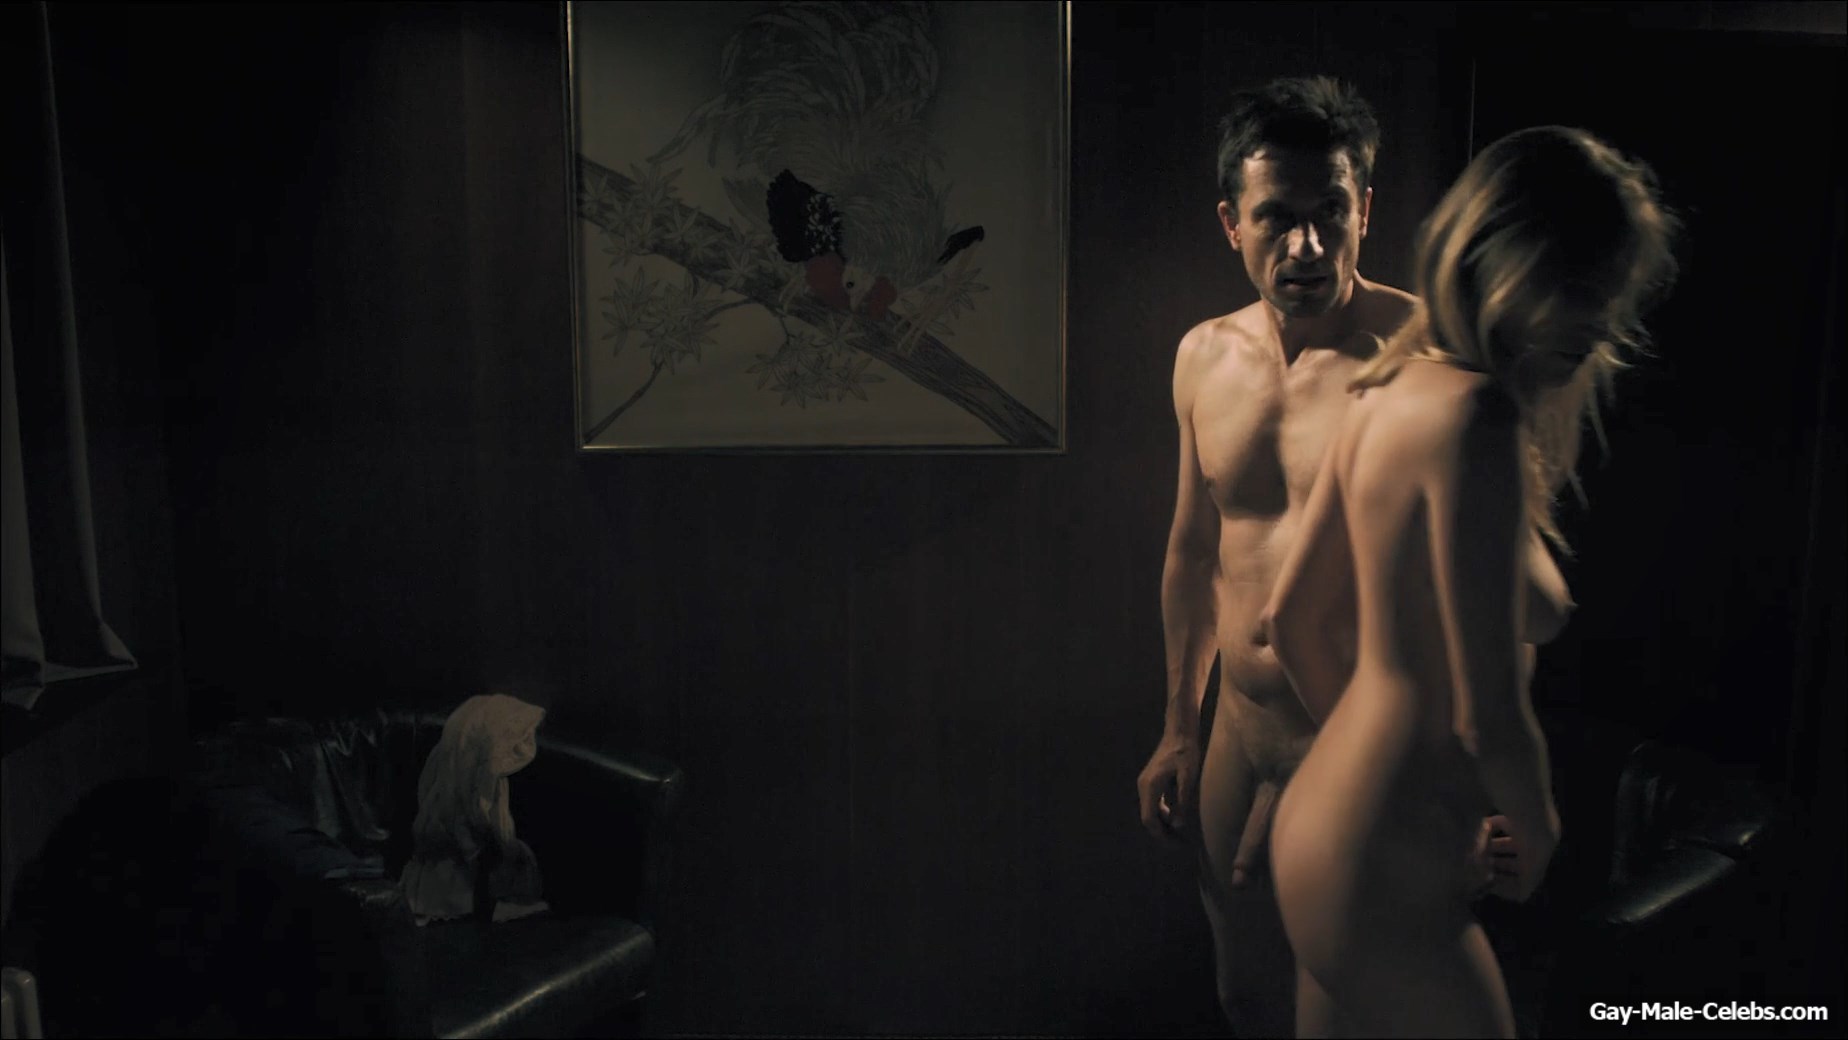 German Actor Oliver Mommsen Frontal Nude Movie Scenes